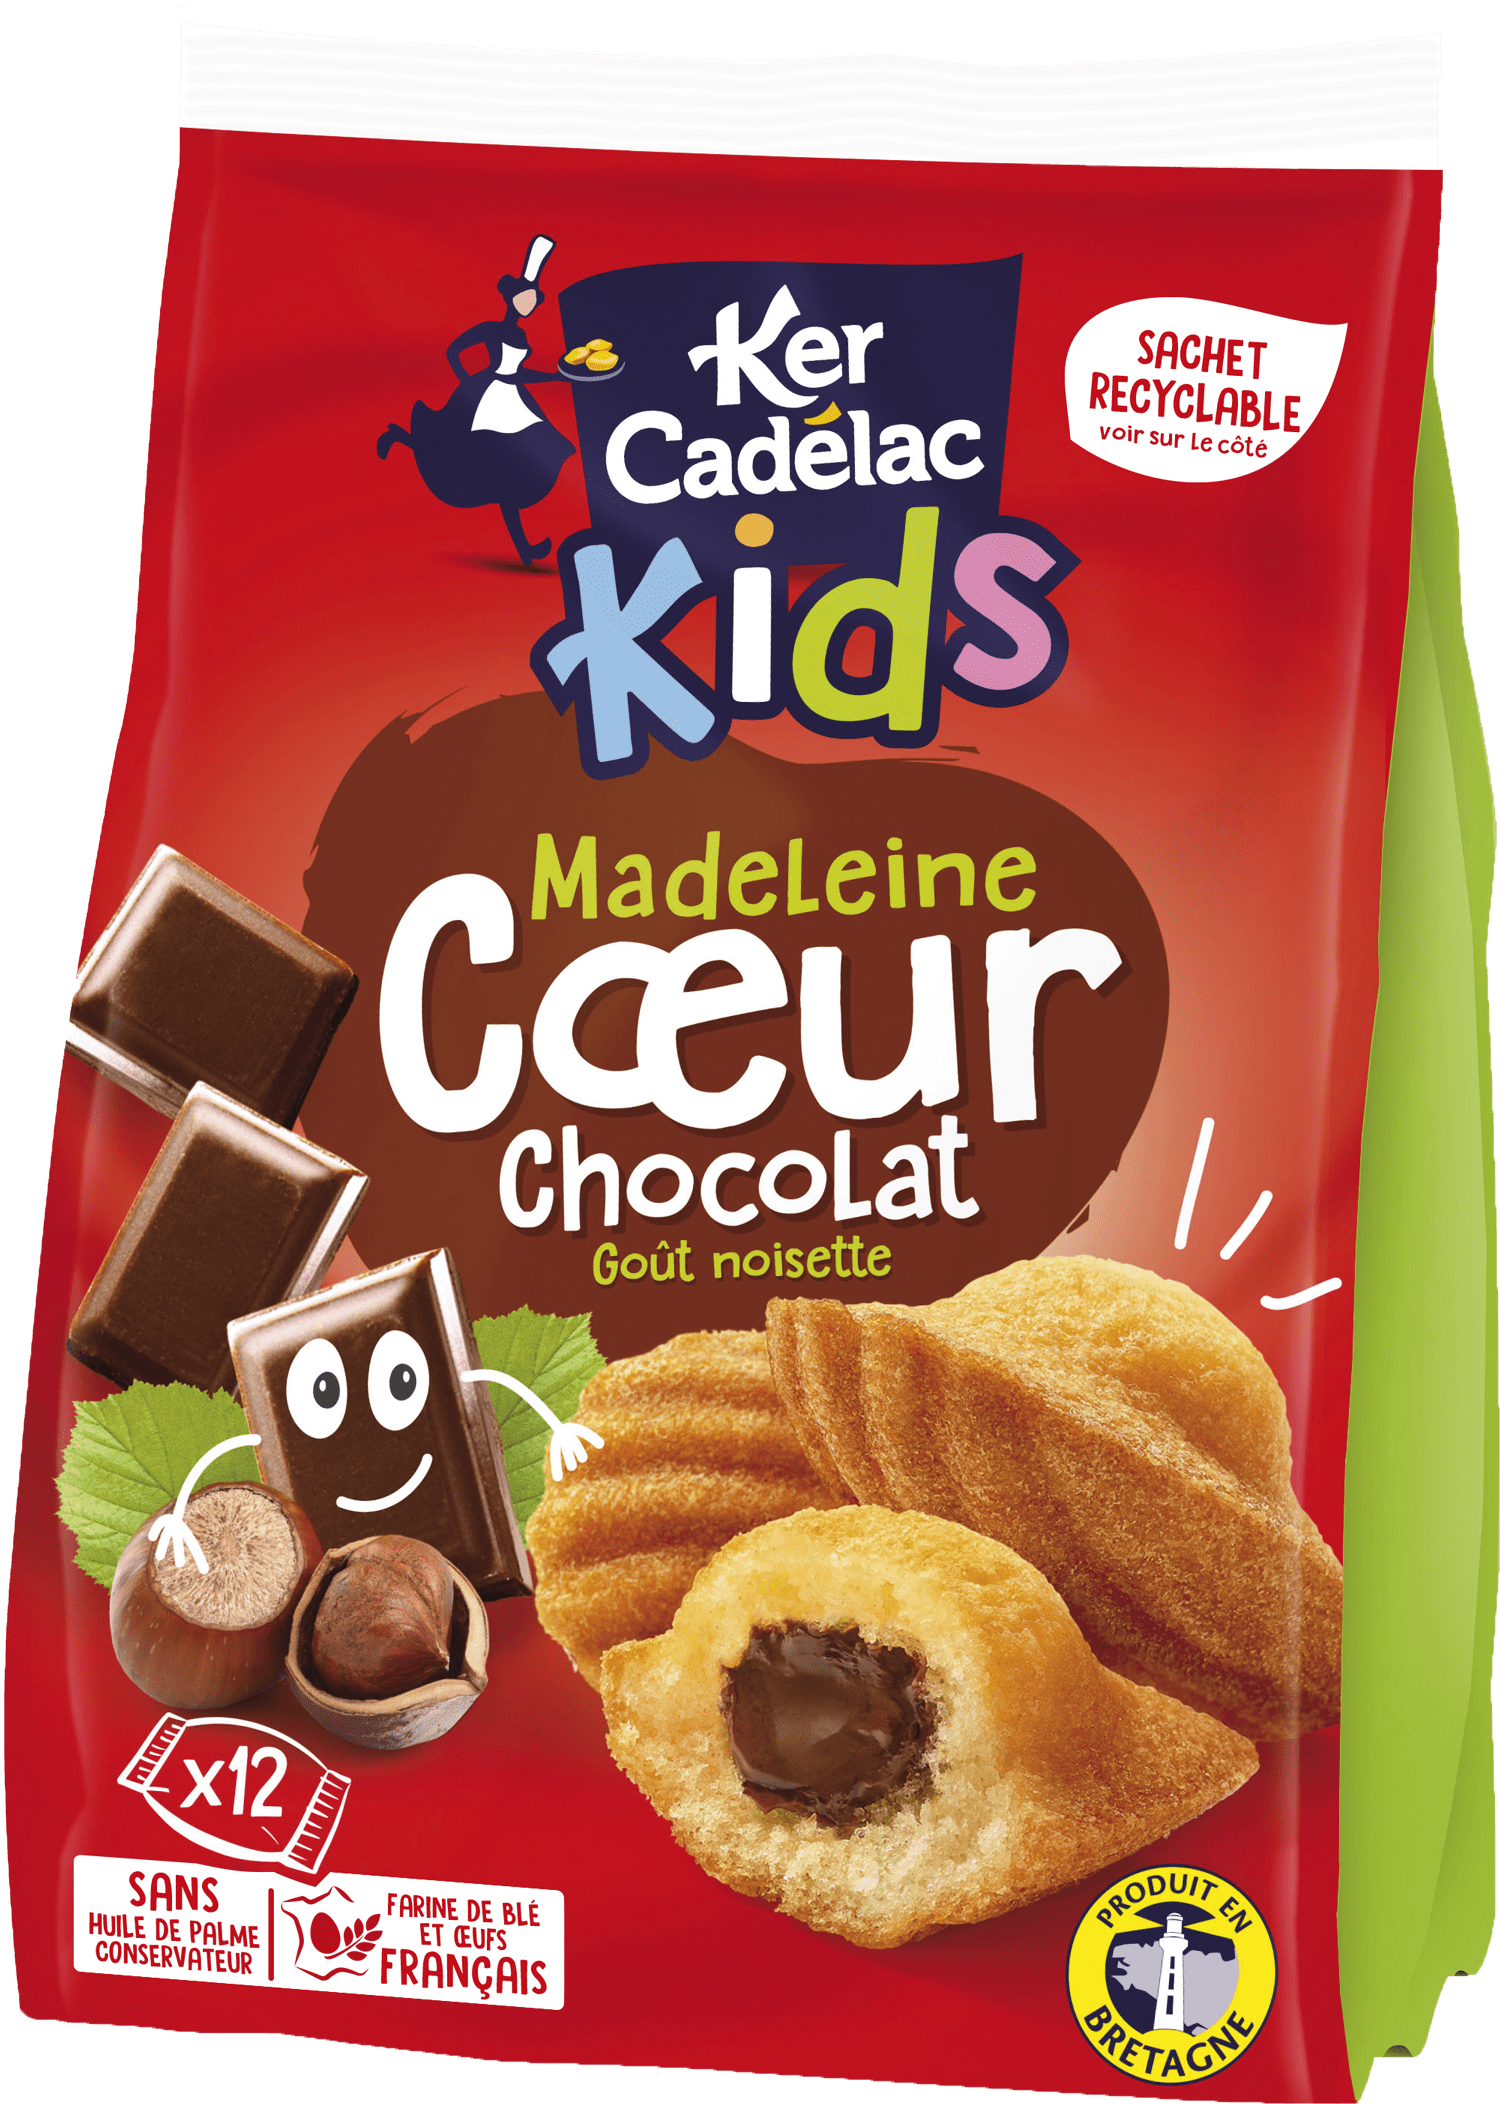 Madeleine Cœur chocolat goût noisette | Ker Cadélac